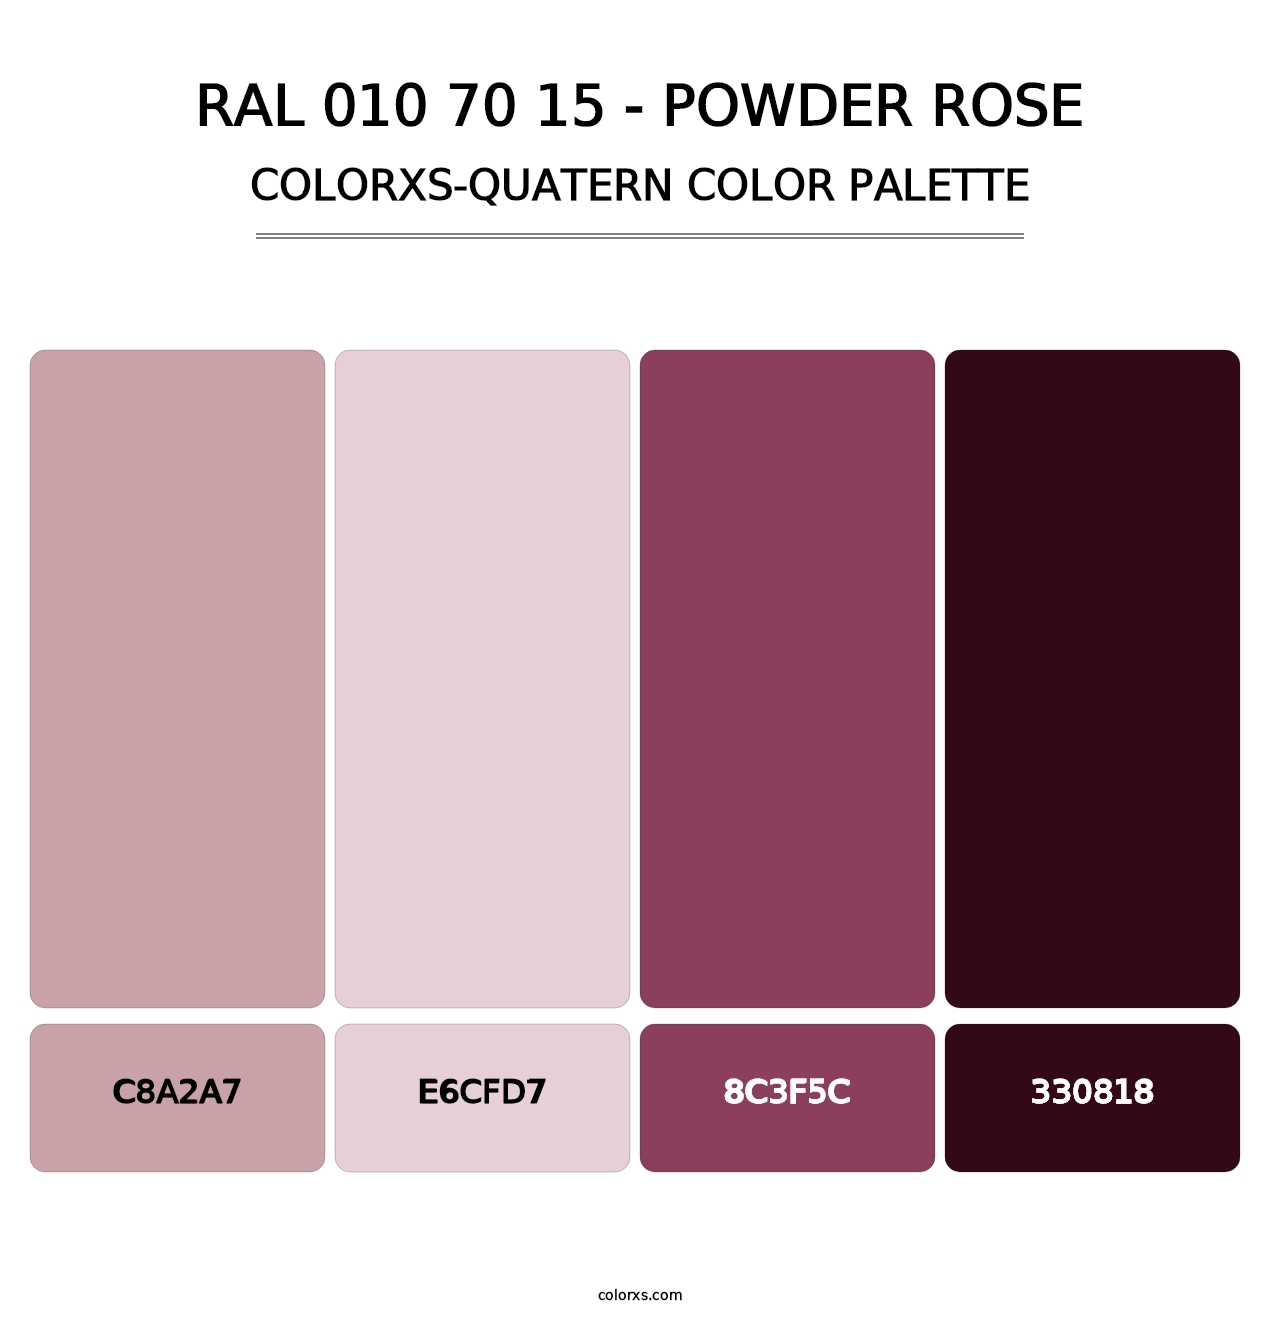 RAL 010 70 15 - Powder Rose - Colorxs Quatern Palette